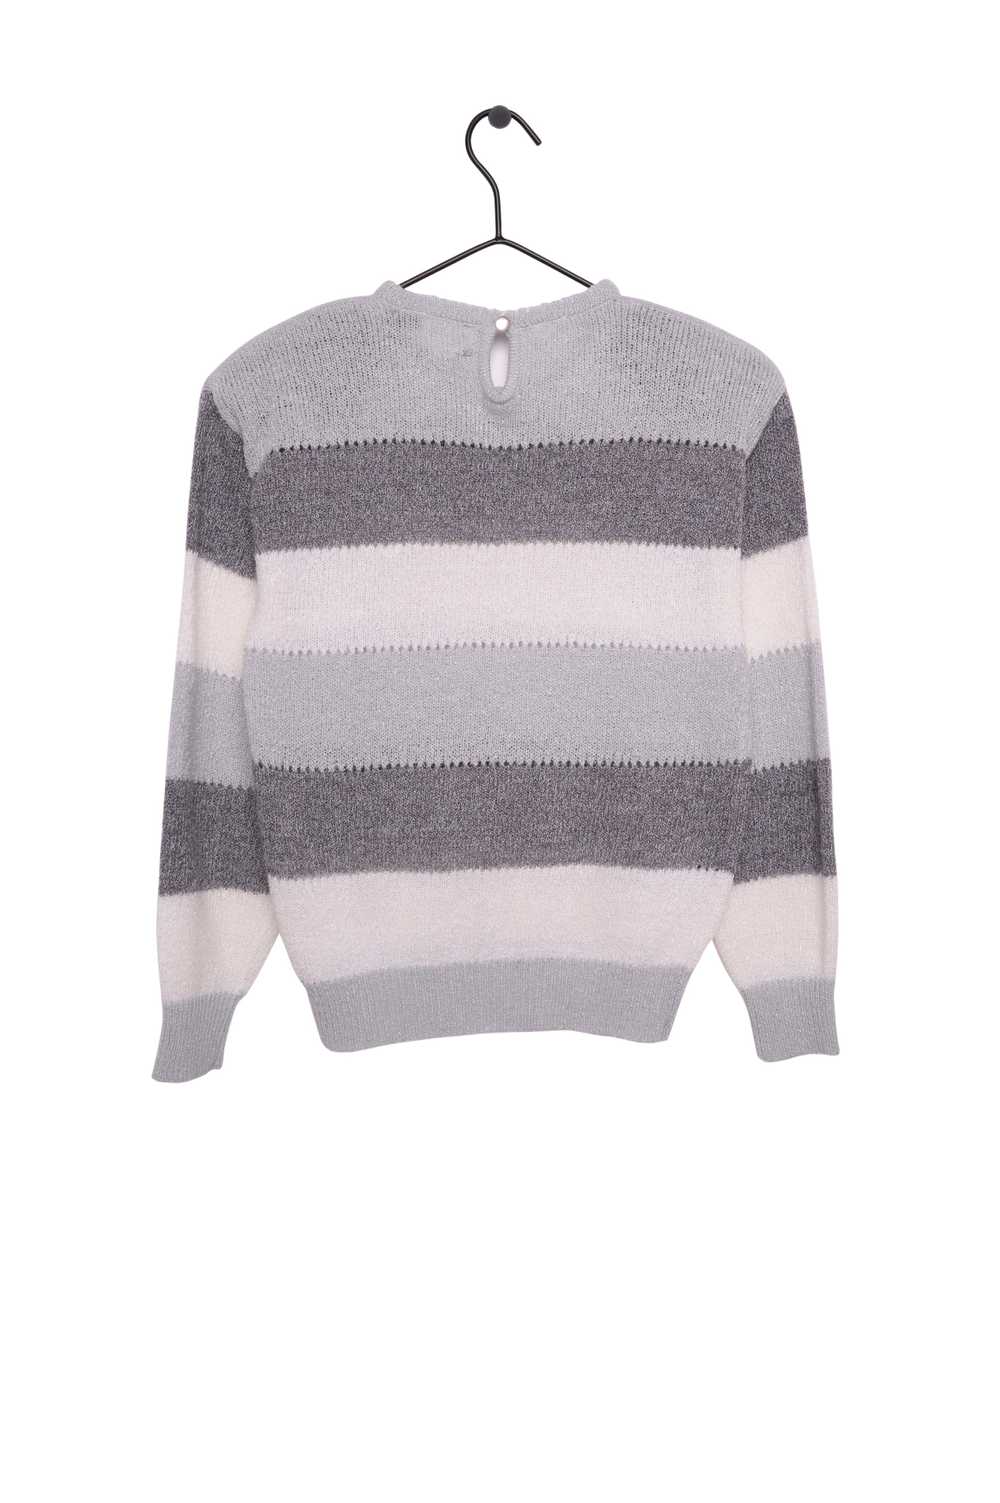 1980s Grayscale Stripe Sweater - image 2